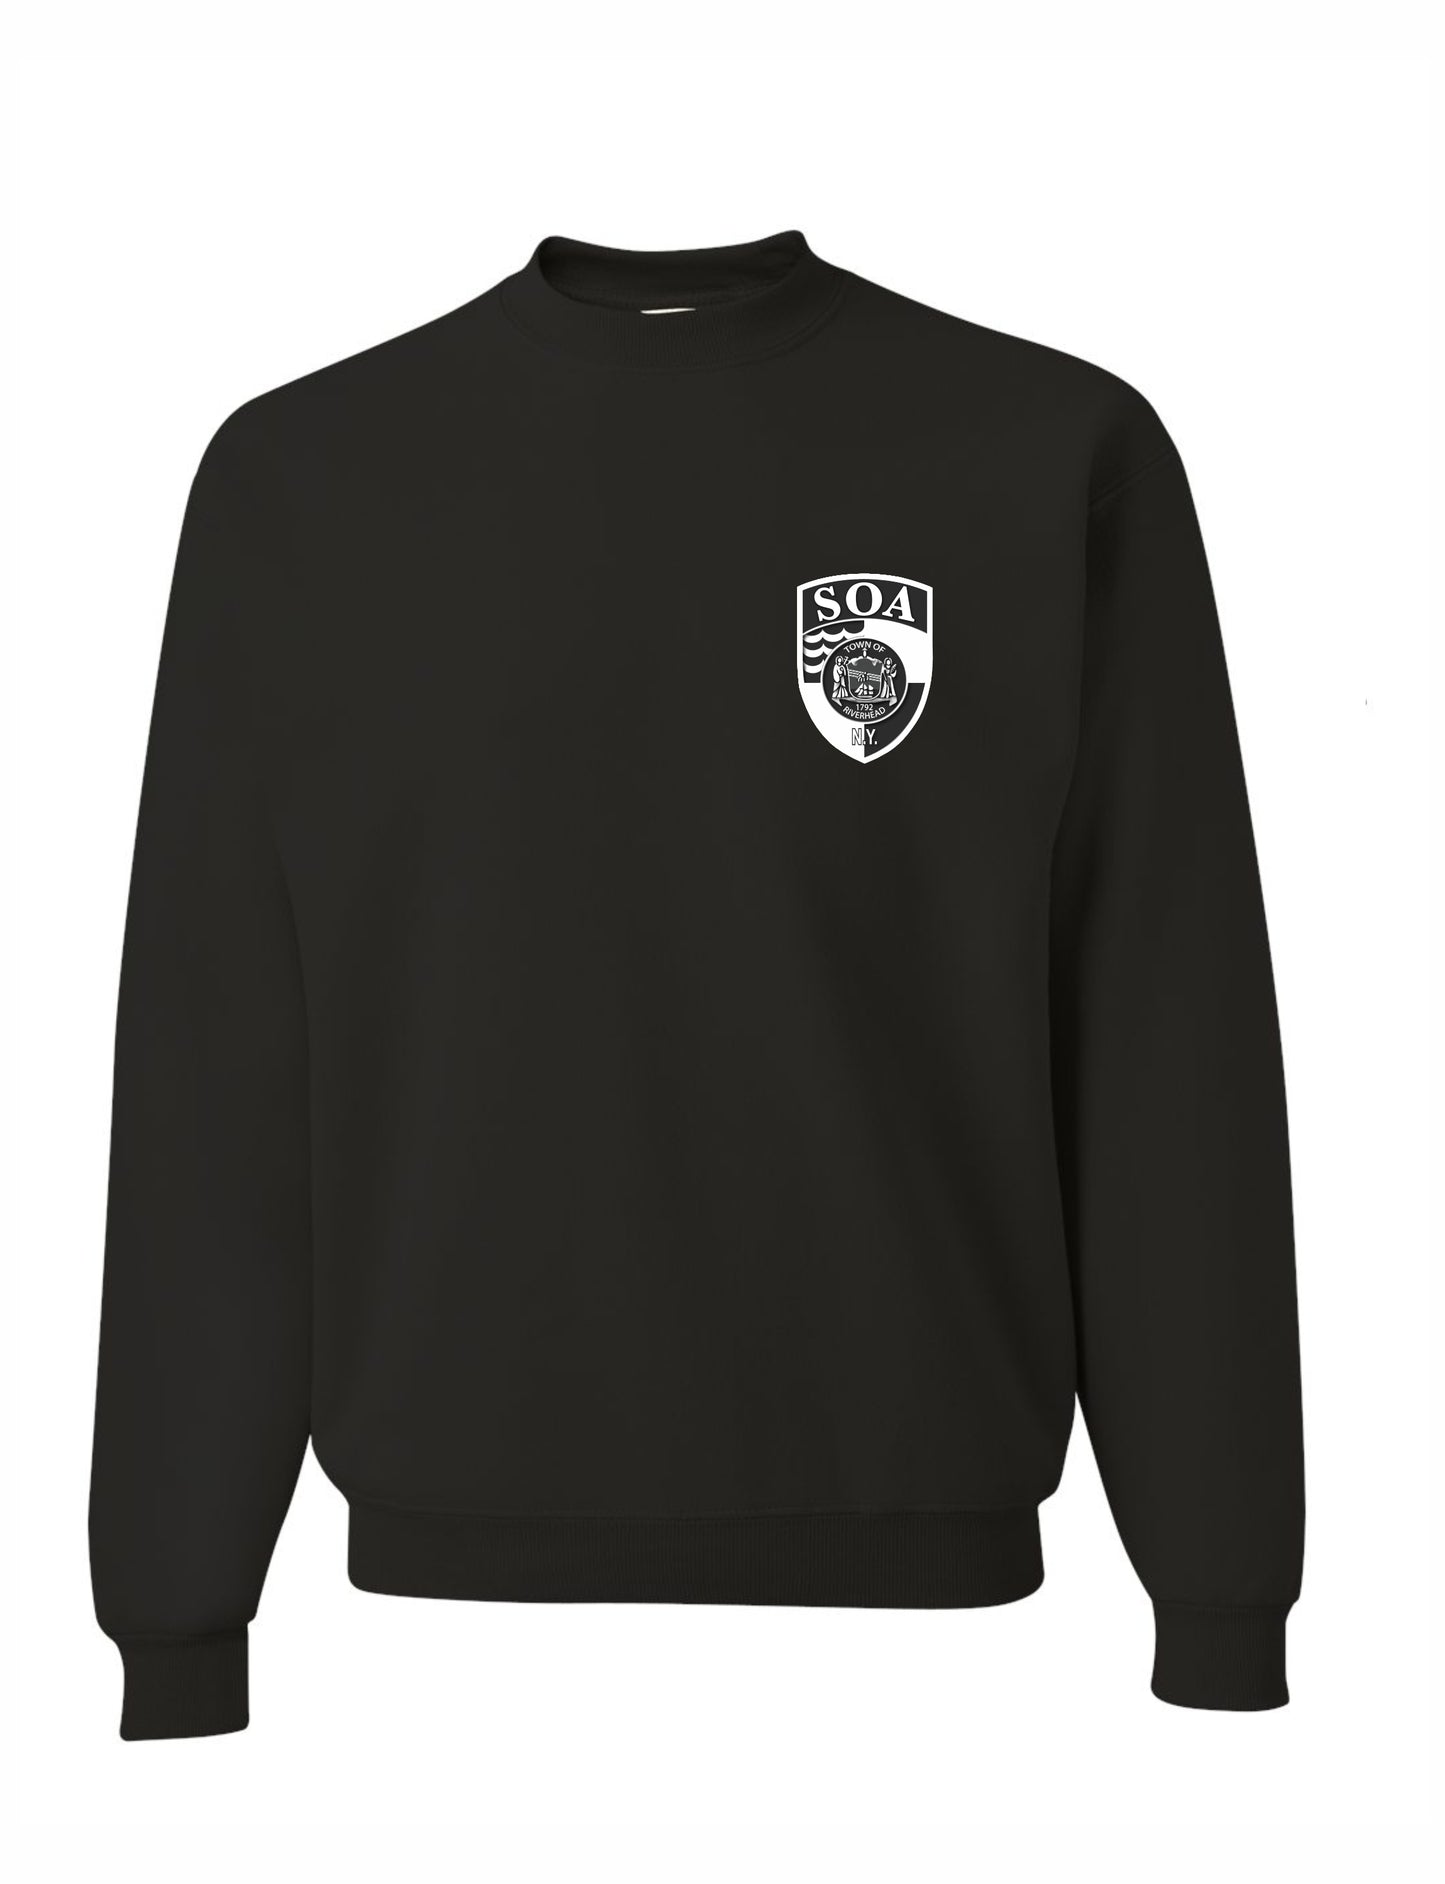 RPD SOA Patch Black Unisex Crewneck Sweatshirt